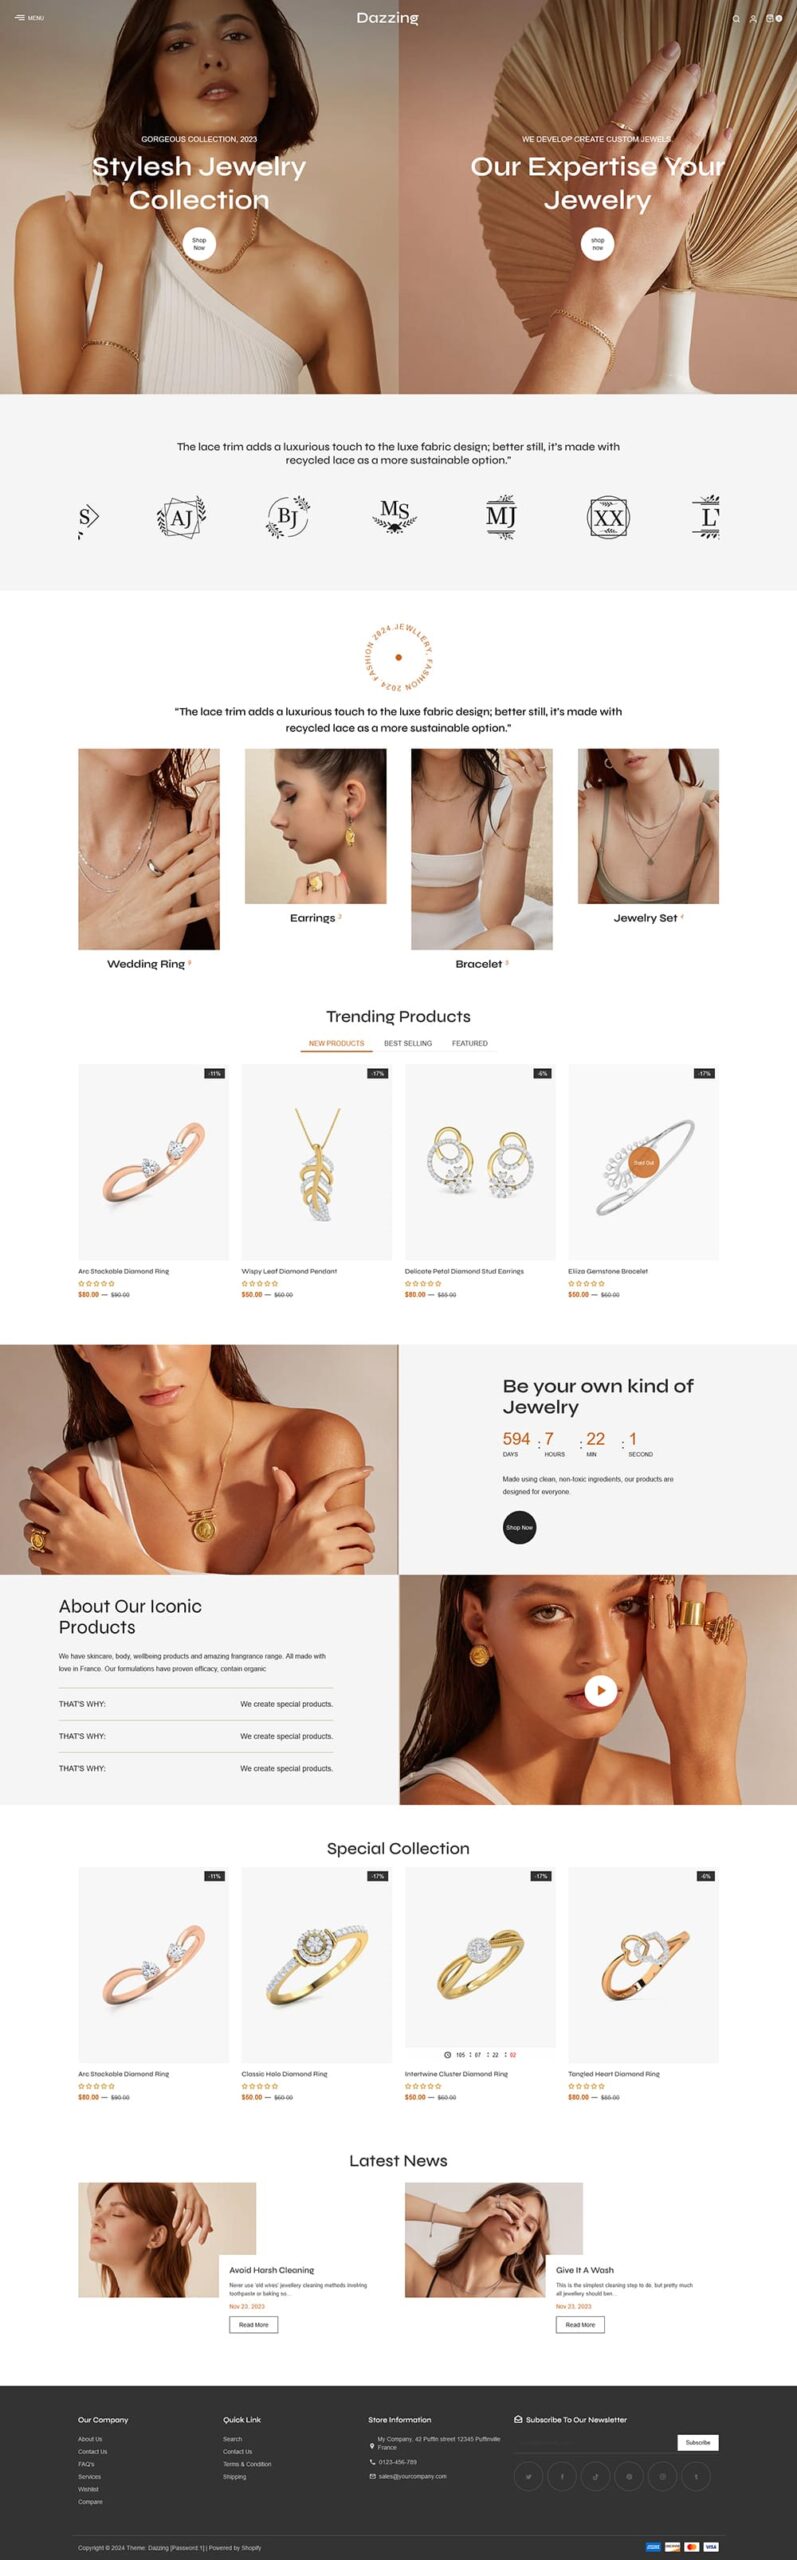 Dazzing - Modern Jewelry Store - Shopify multipurpose Theme